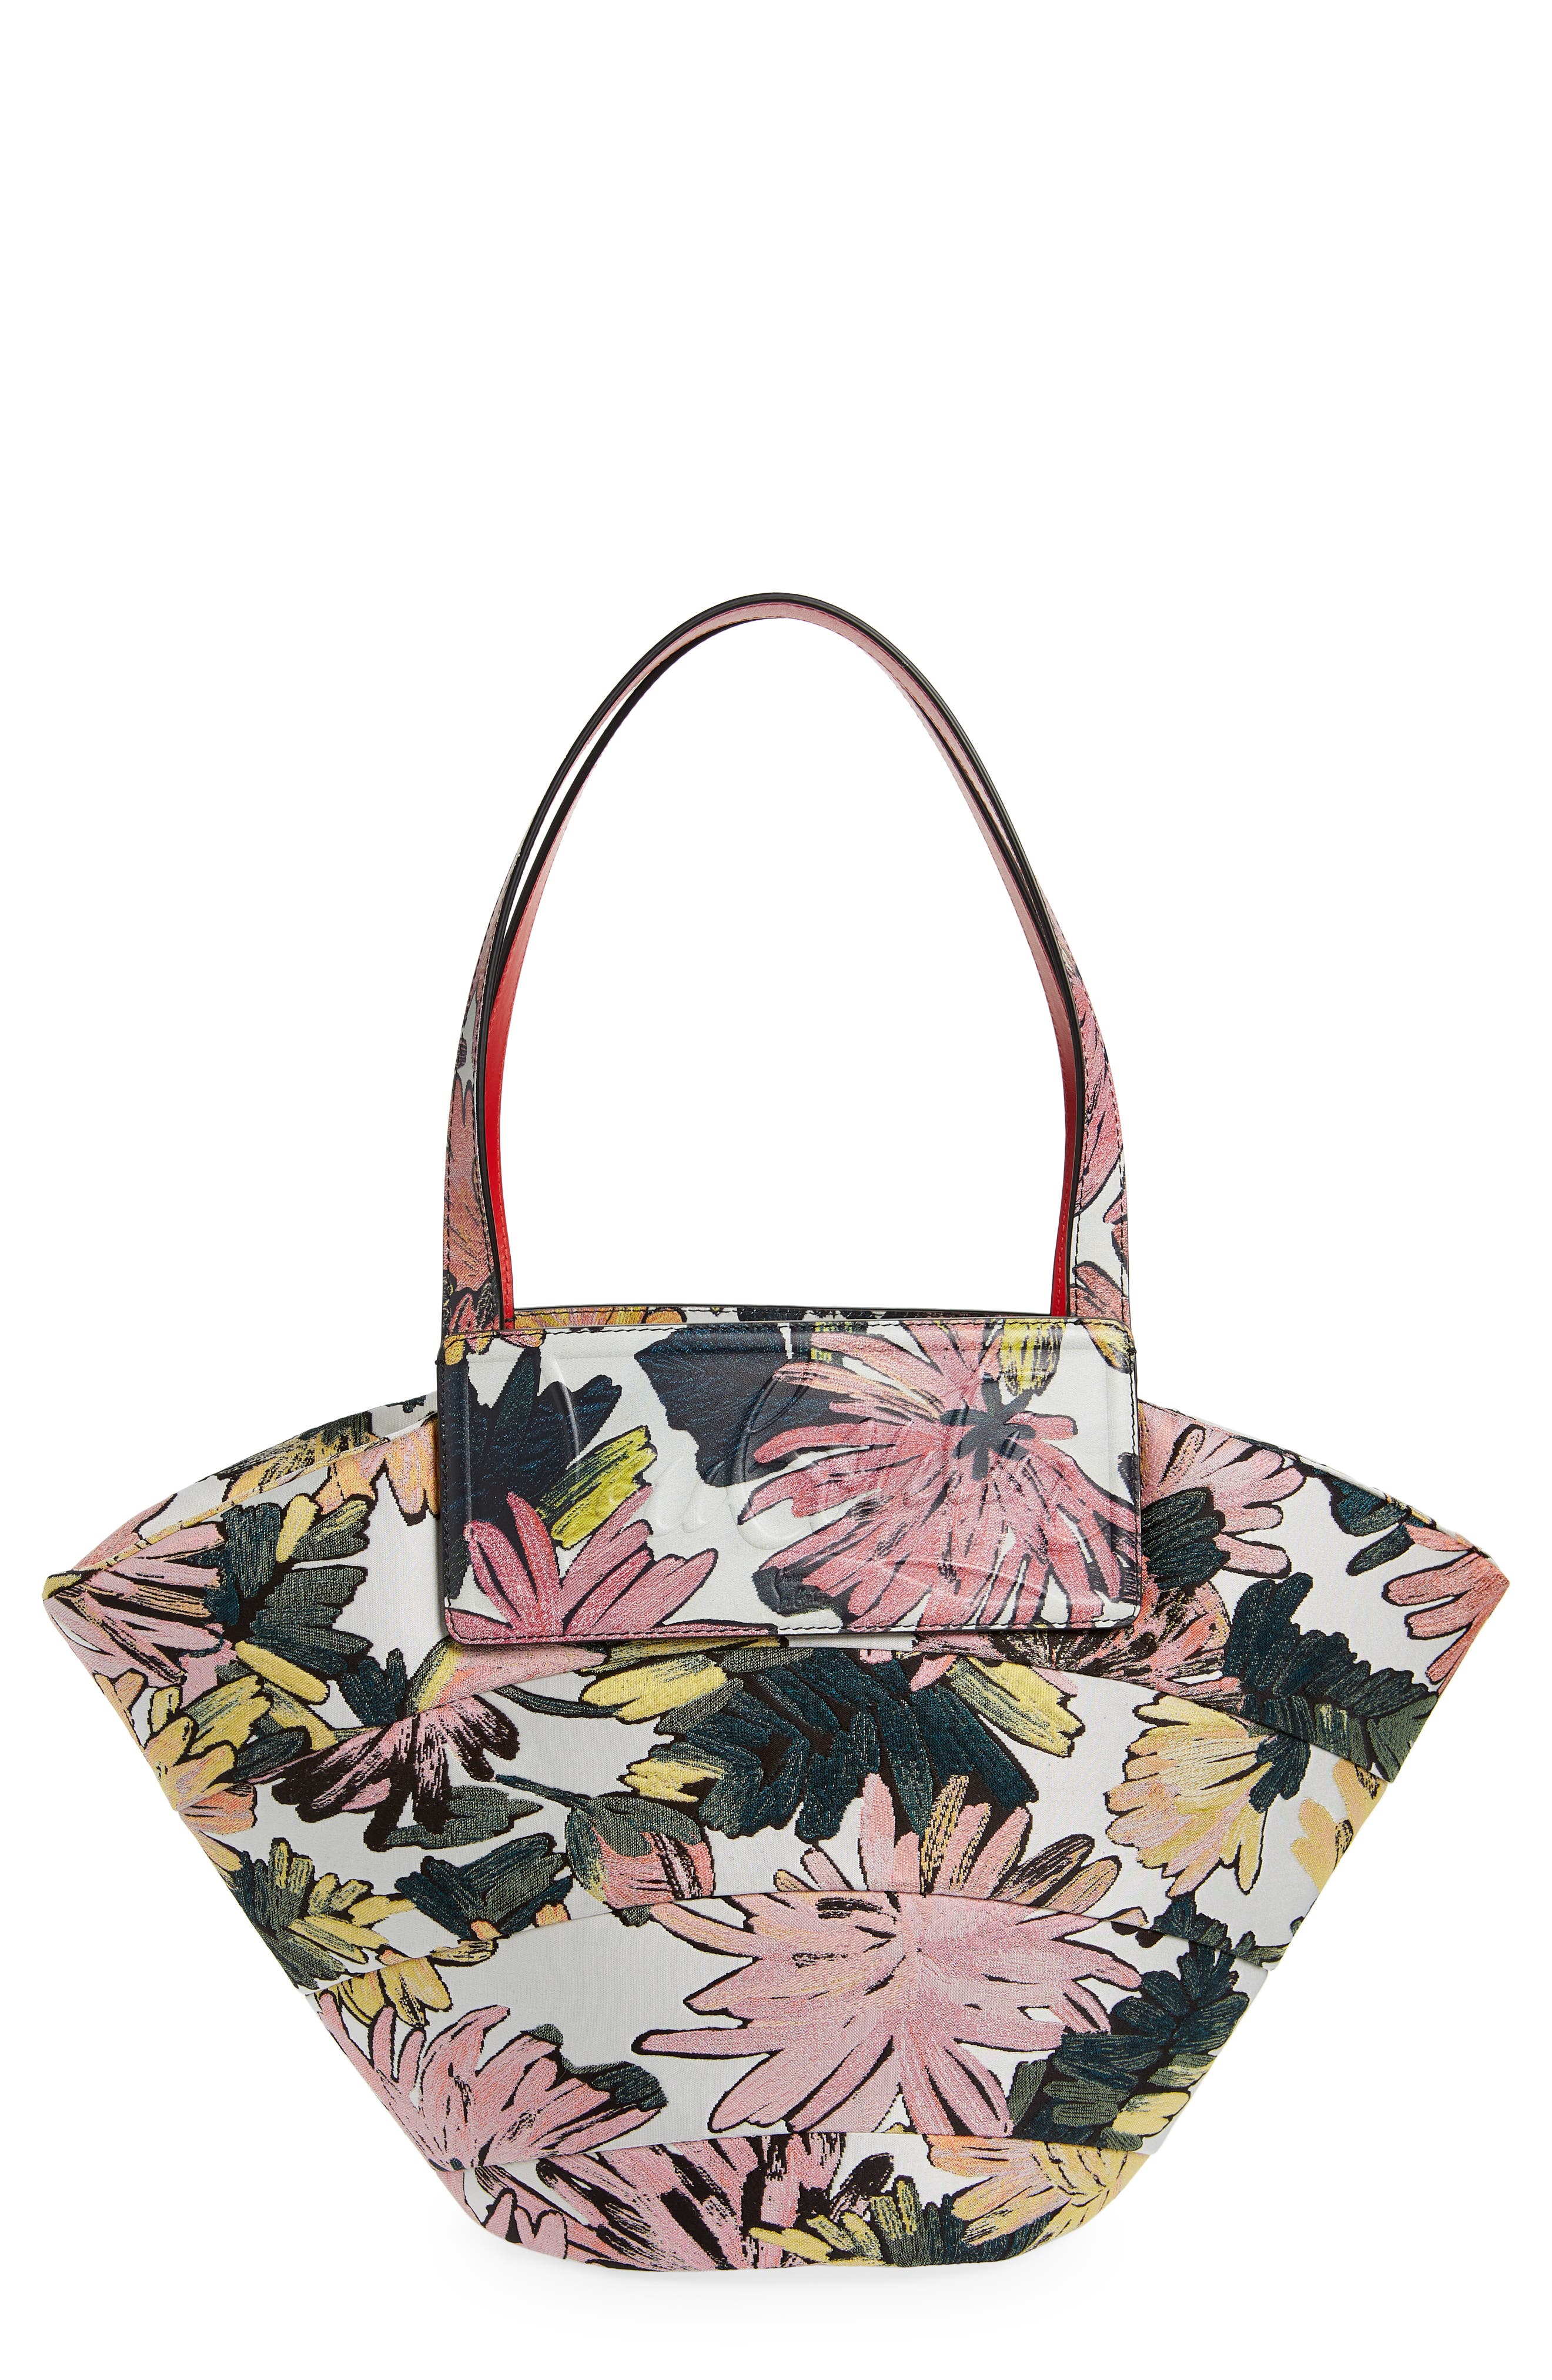 Women Handbag Large Size Floral Pattern Tote Bags Purse Outdoor Satchel Bag BS 